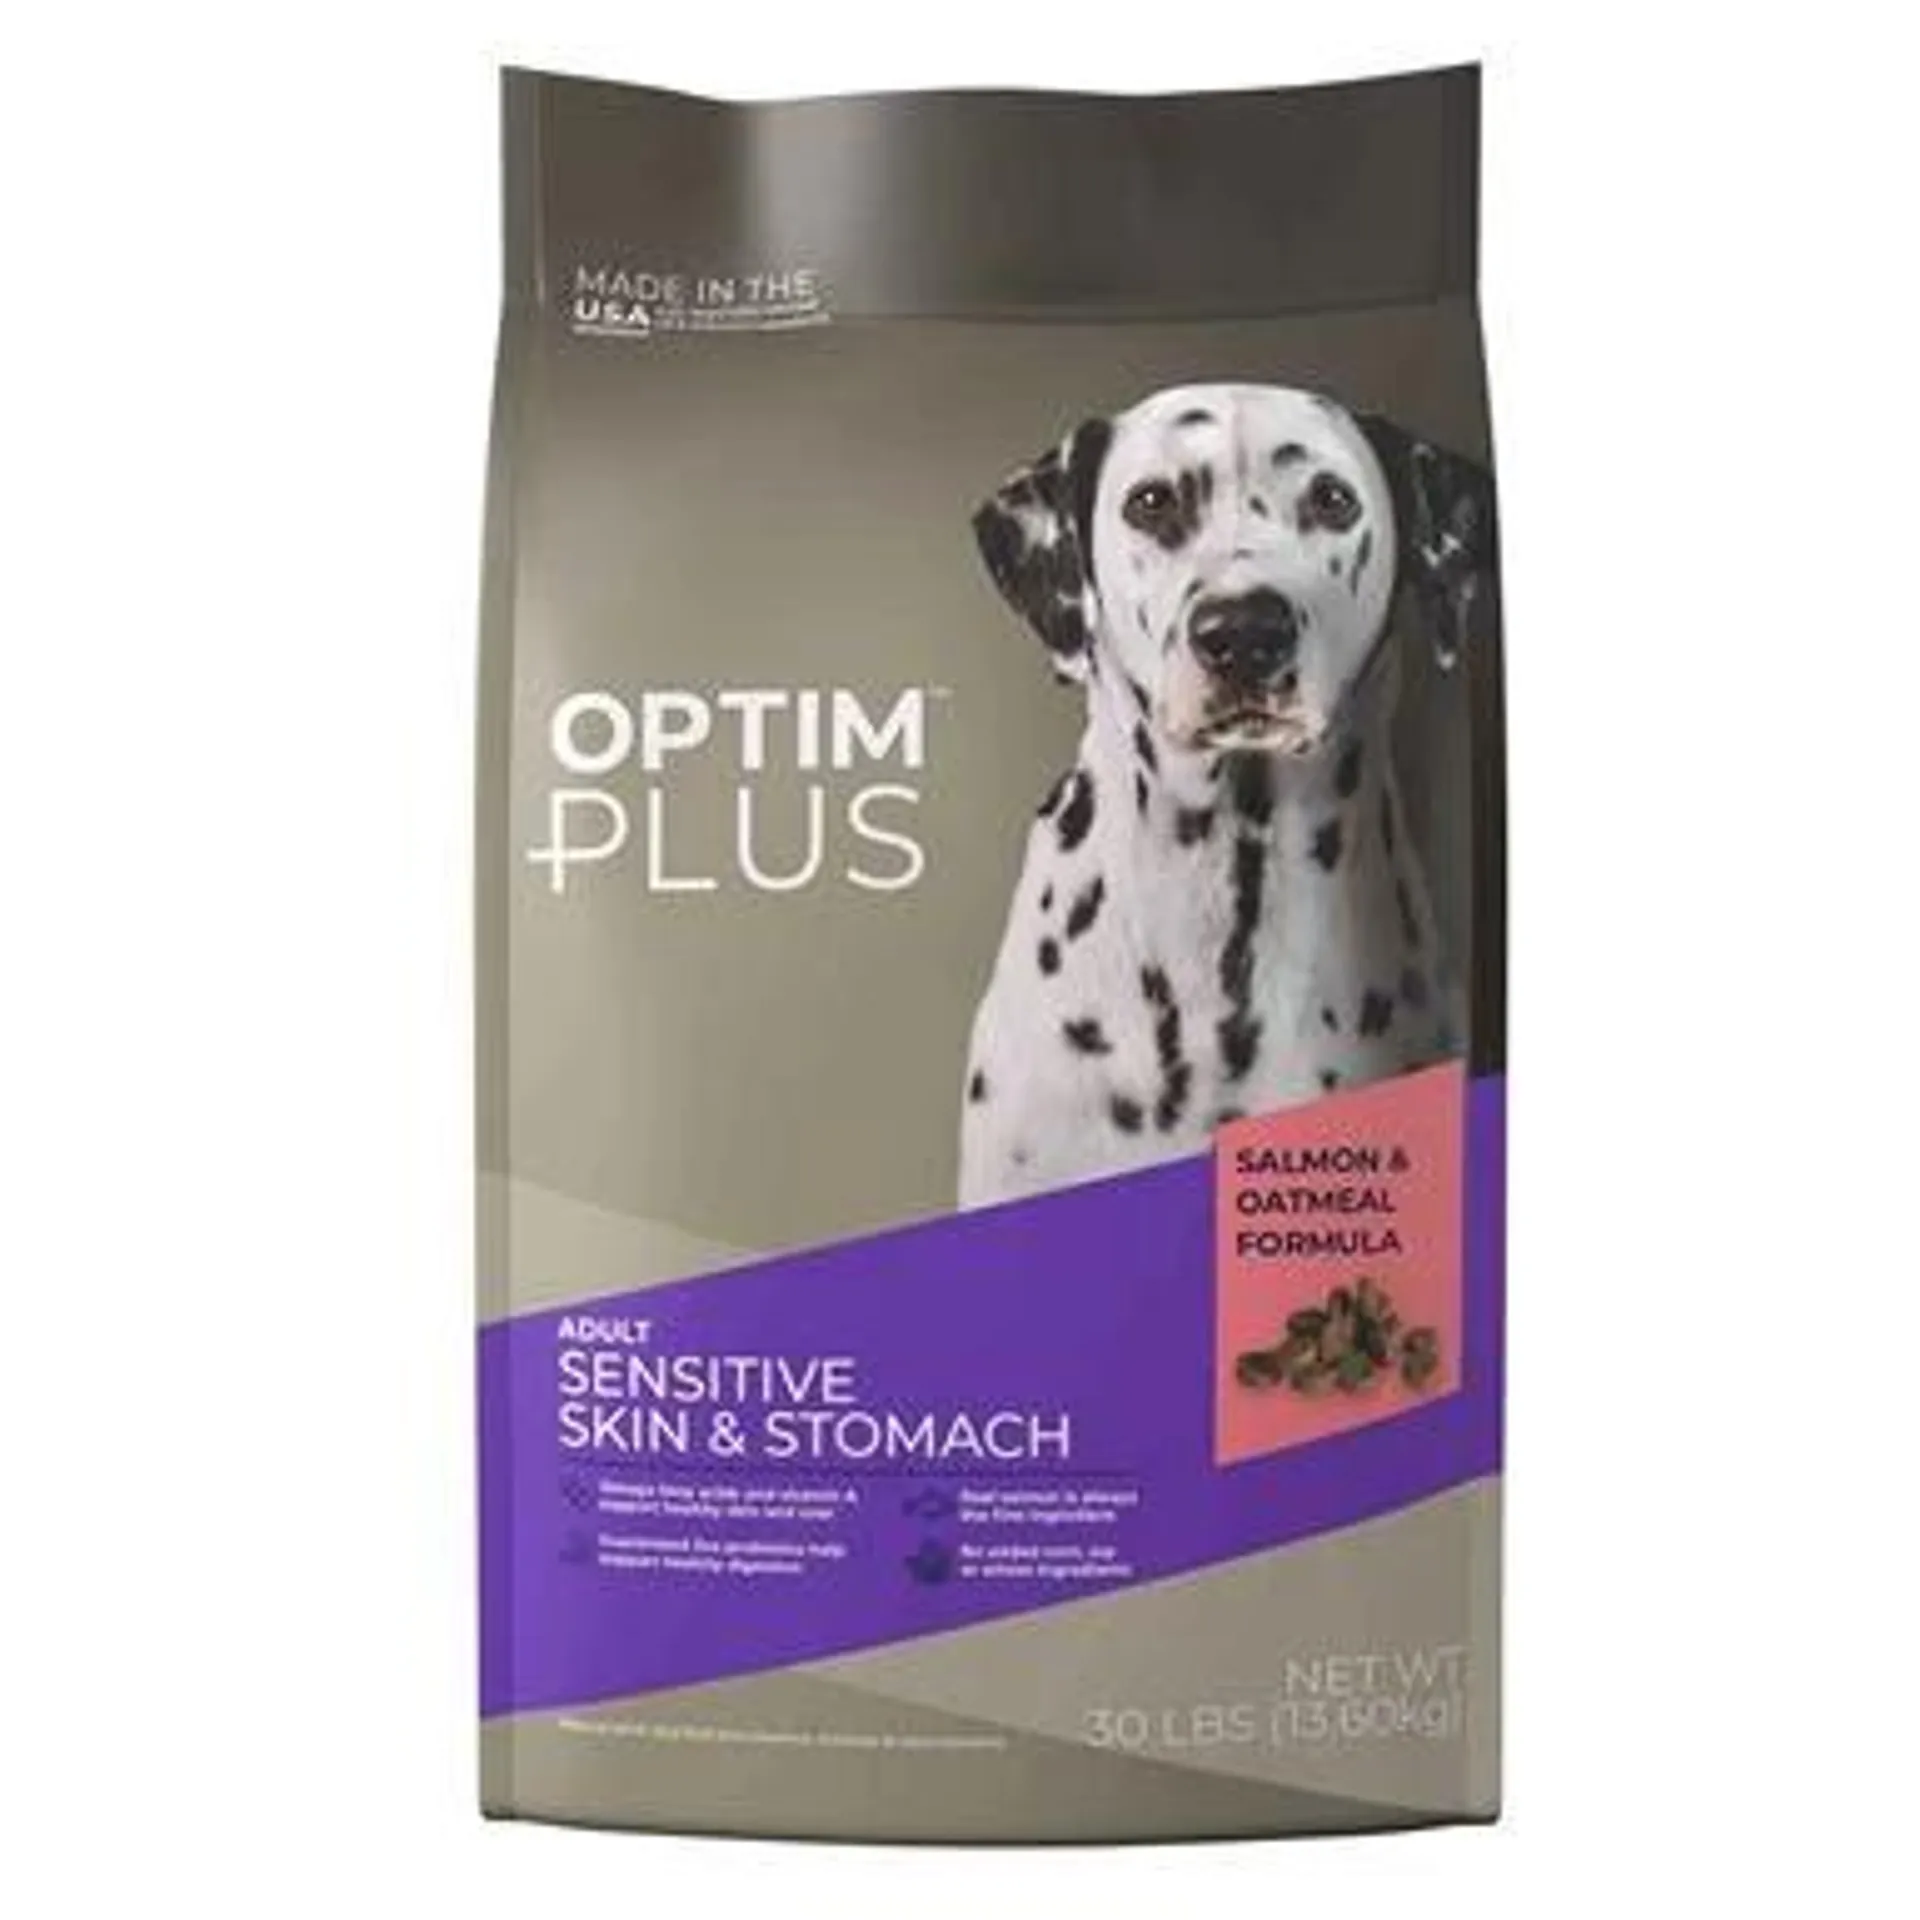 OptimPlus Adult Sensitive Skin & Stomach Salmon & Oatmeal Formula Dry Dog Food, 30 Pounds